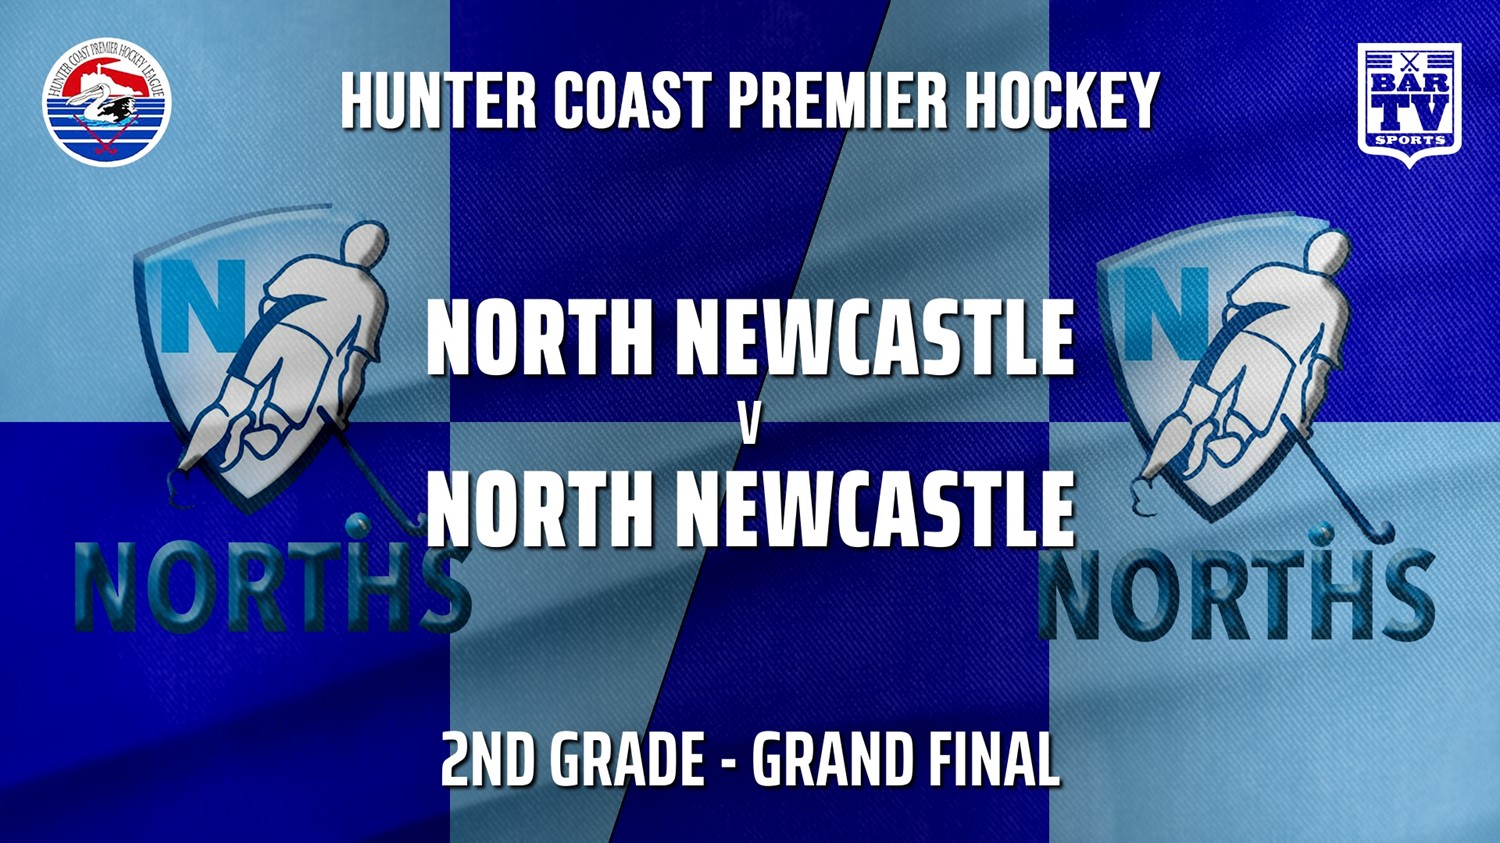 220917-Hunter Coast Premier Hockey Grand Final - 2nd Grade - North Newcastle v North Newcastle Minigame Slate Image